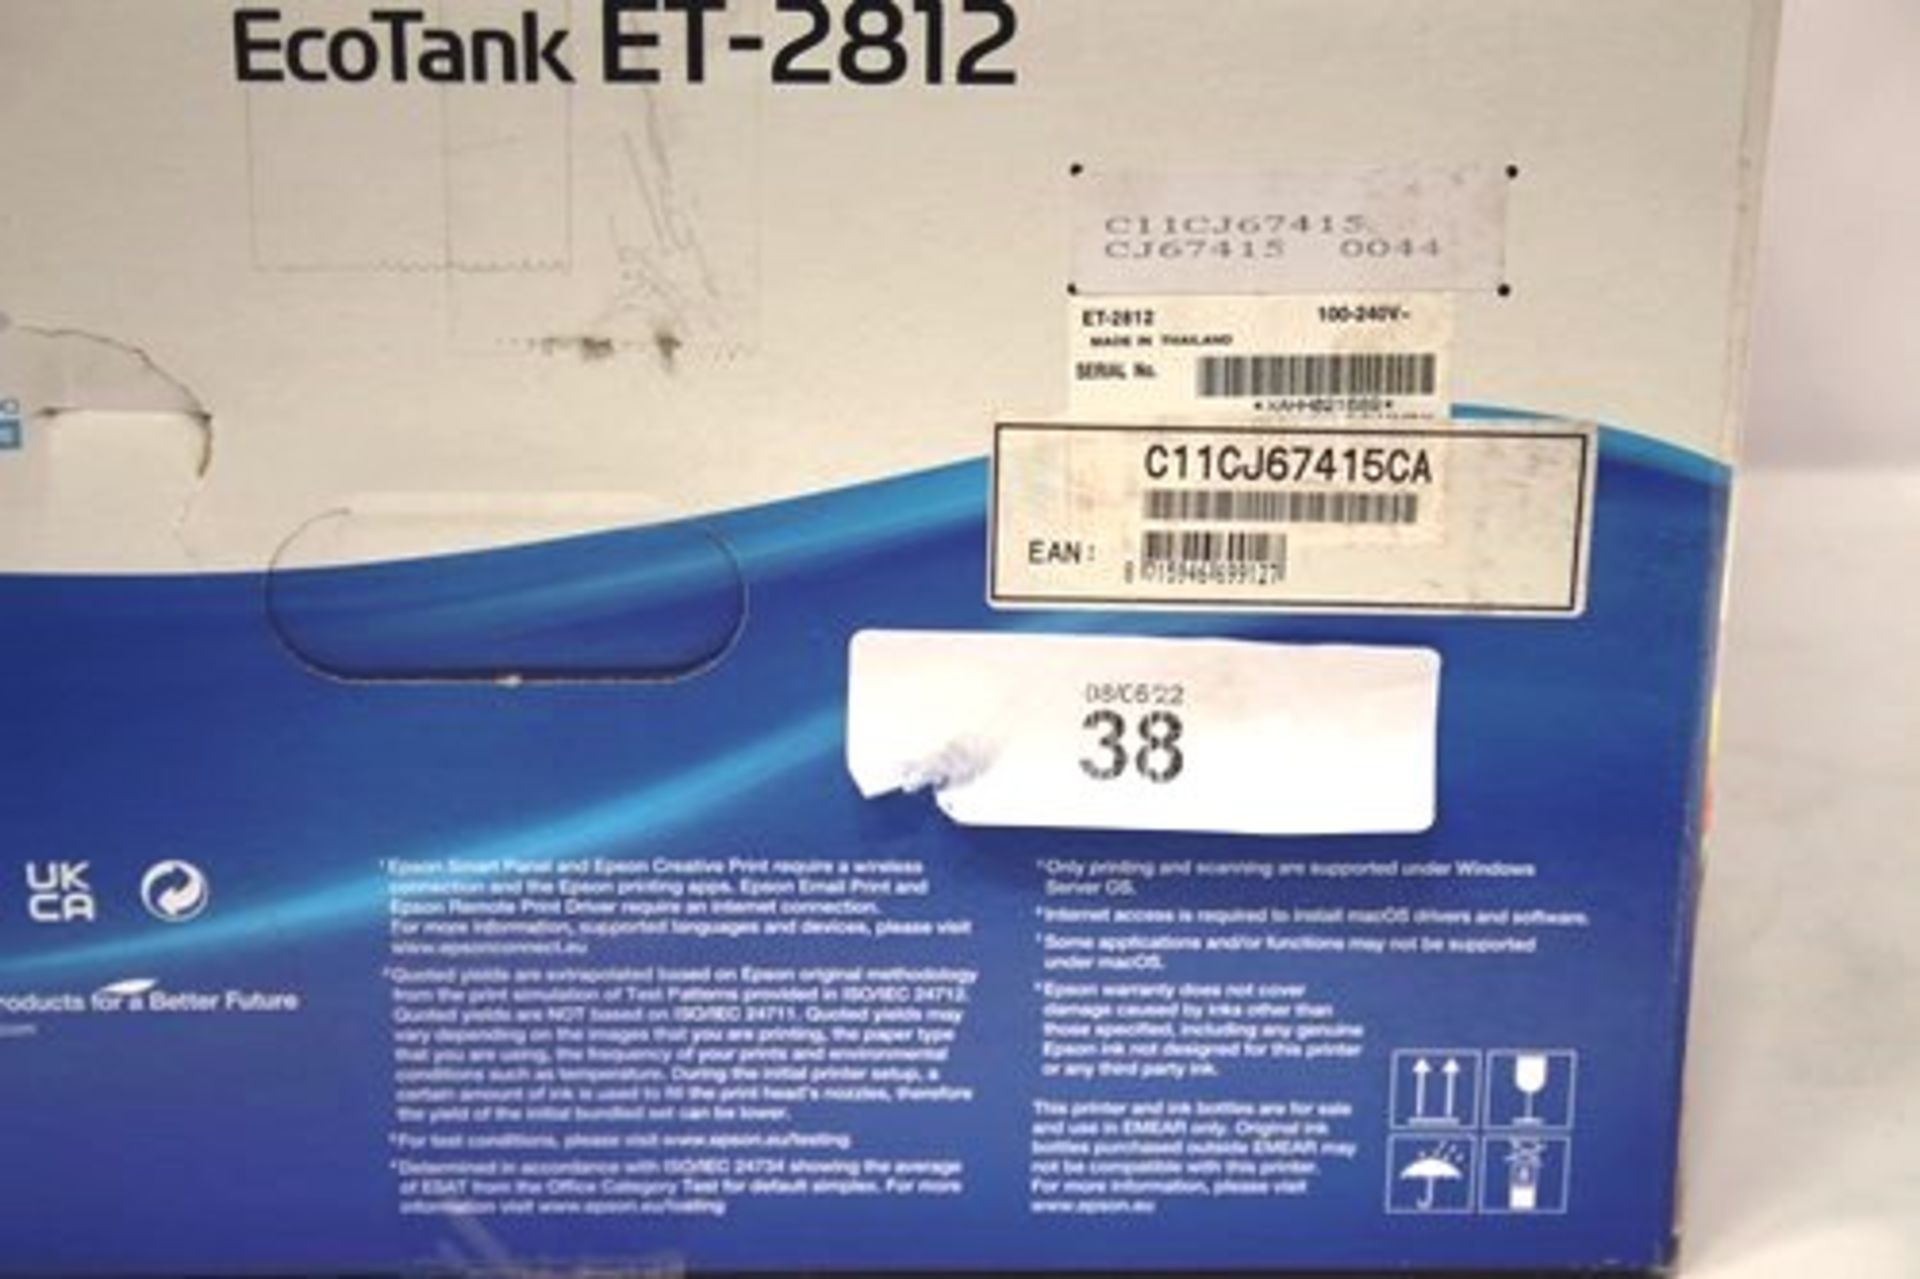 1 x Epson EcoTank ET-2812 printer - New (ES3) - Image 2 of 2